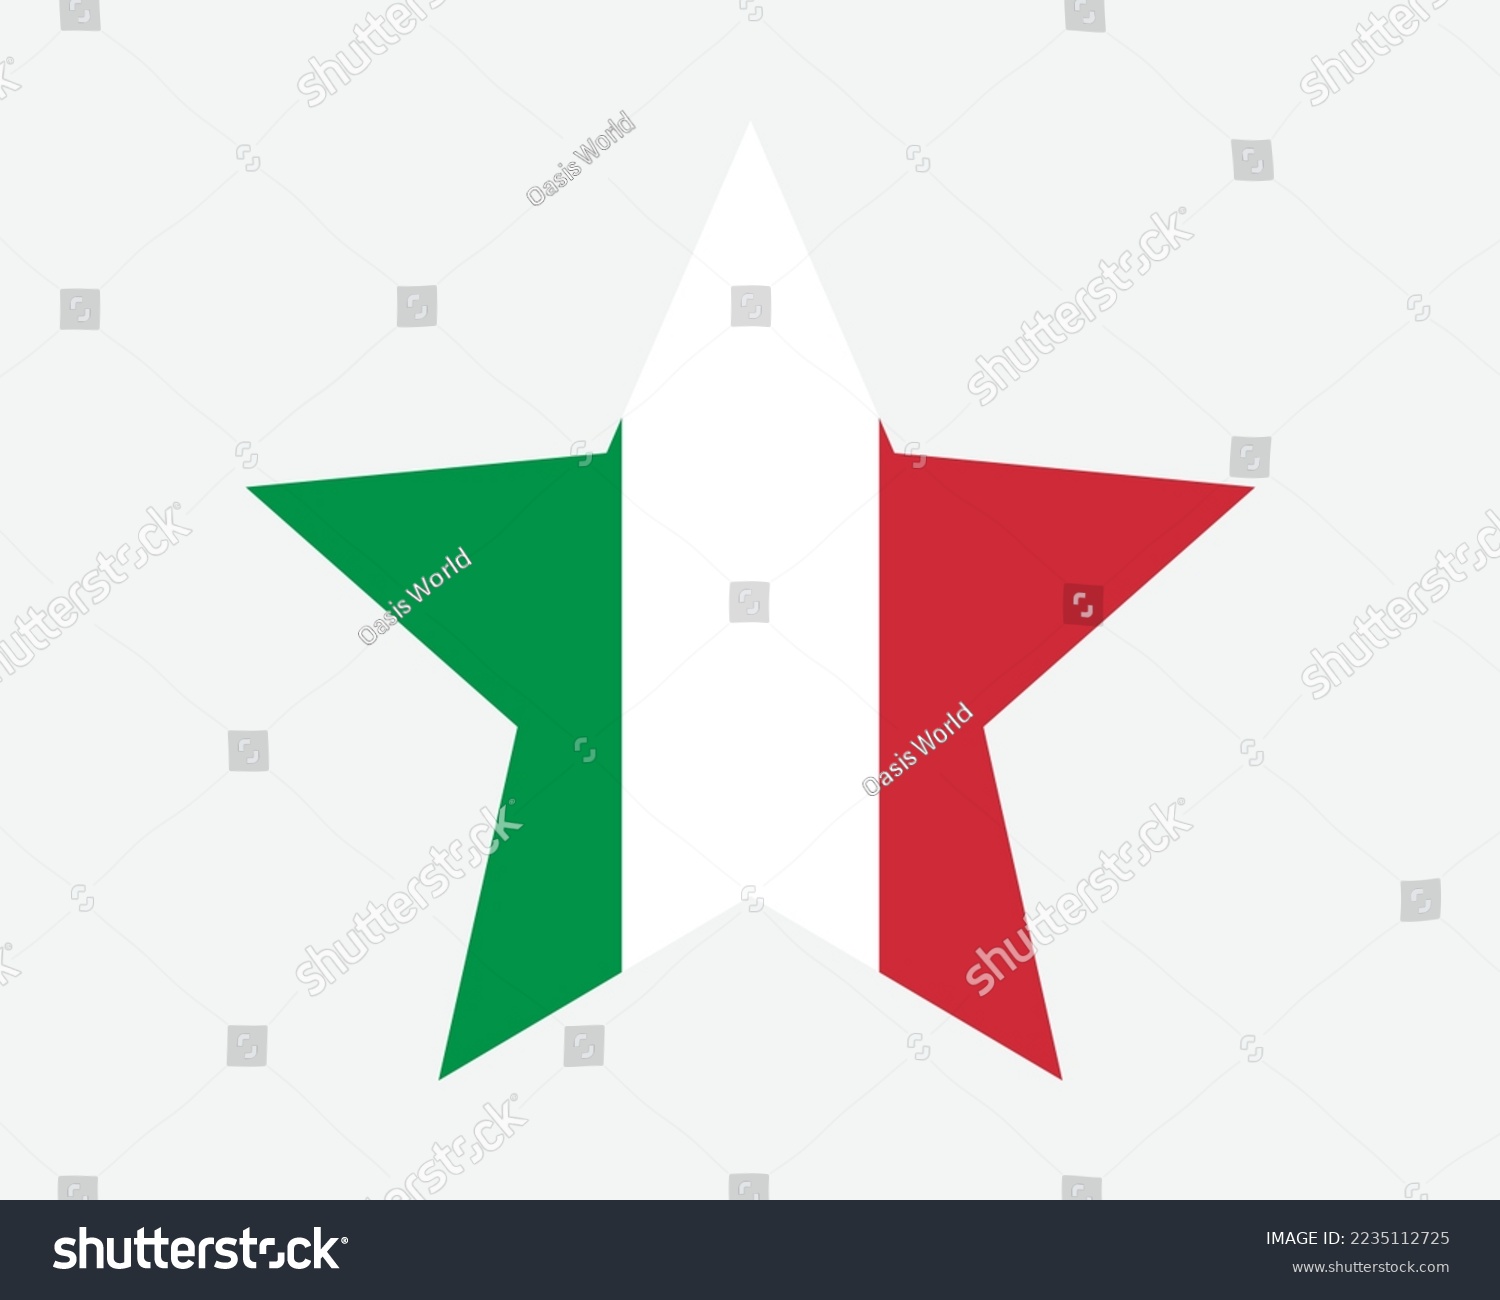 SVG of Italy Star Flag. Italian Star Shape Flag. Country National Banner Icon Symbol Vector Flat Artwork Graphic Illustration svg